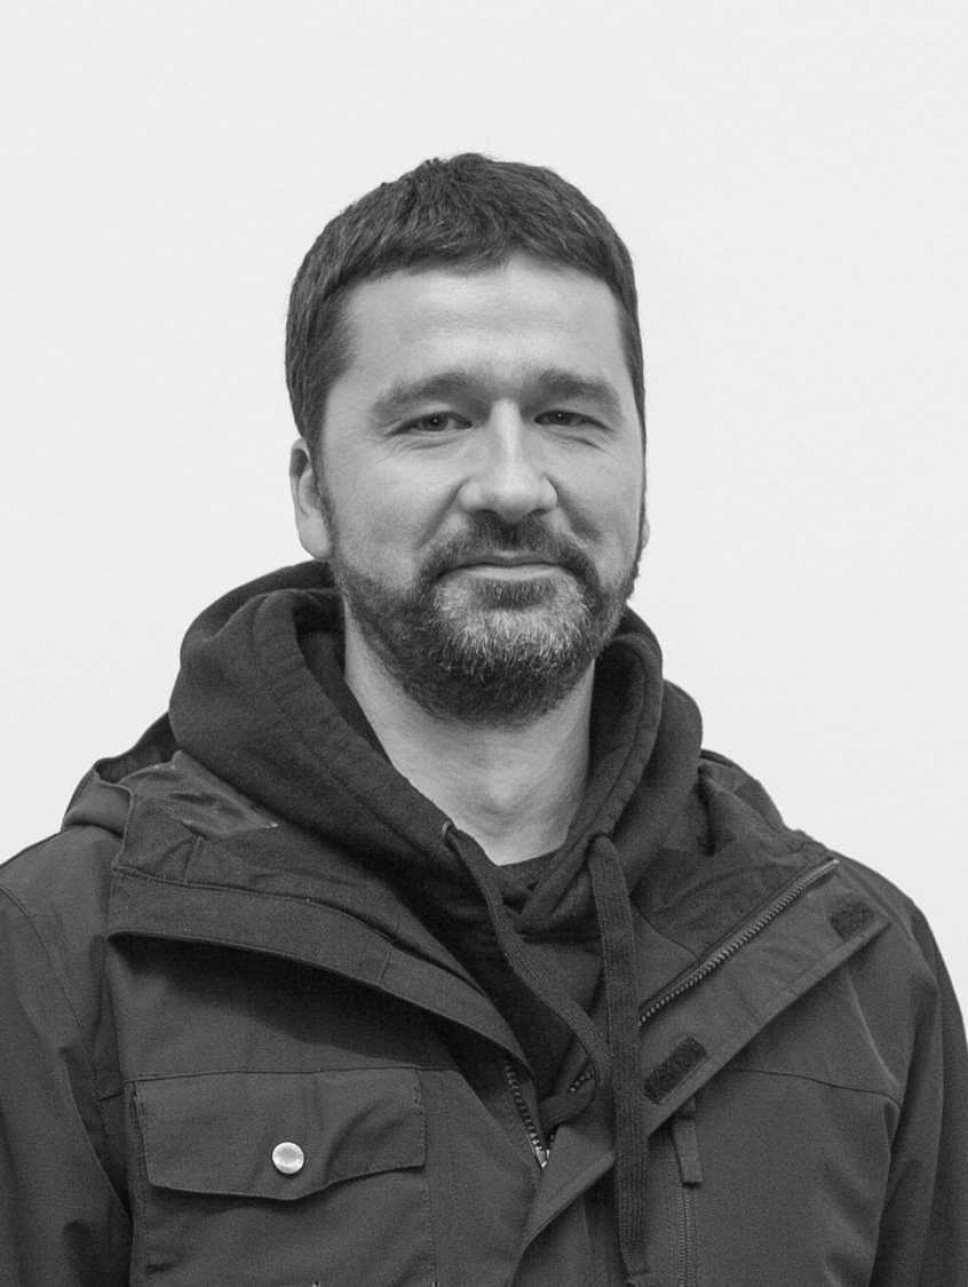 Biography - Kojić Stevan